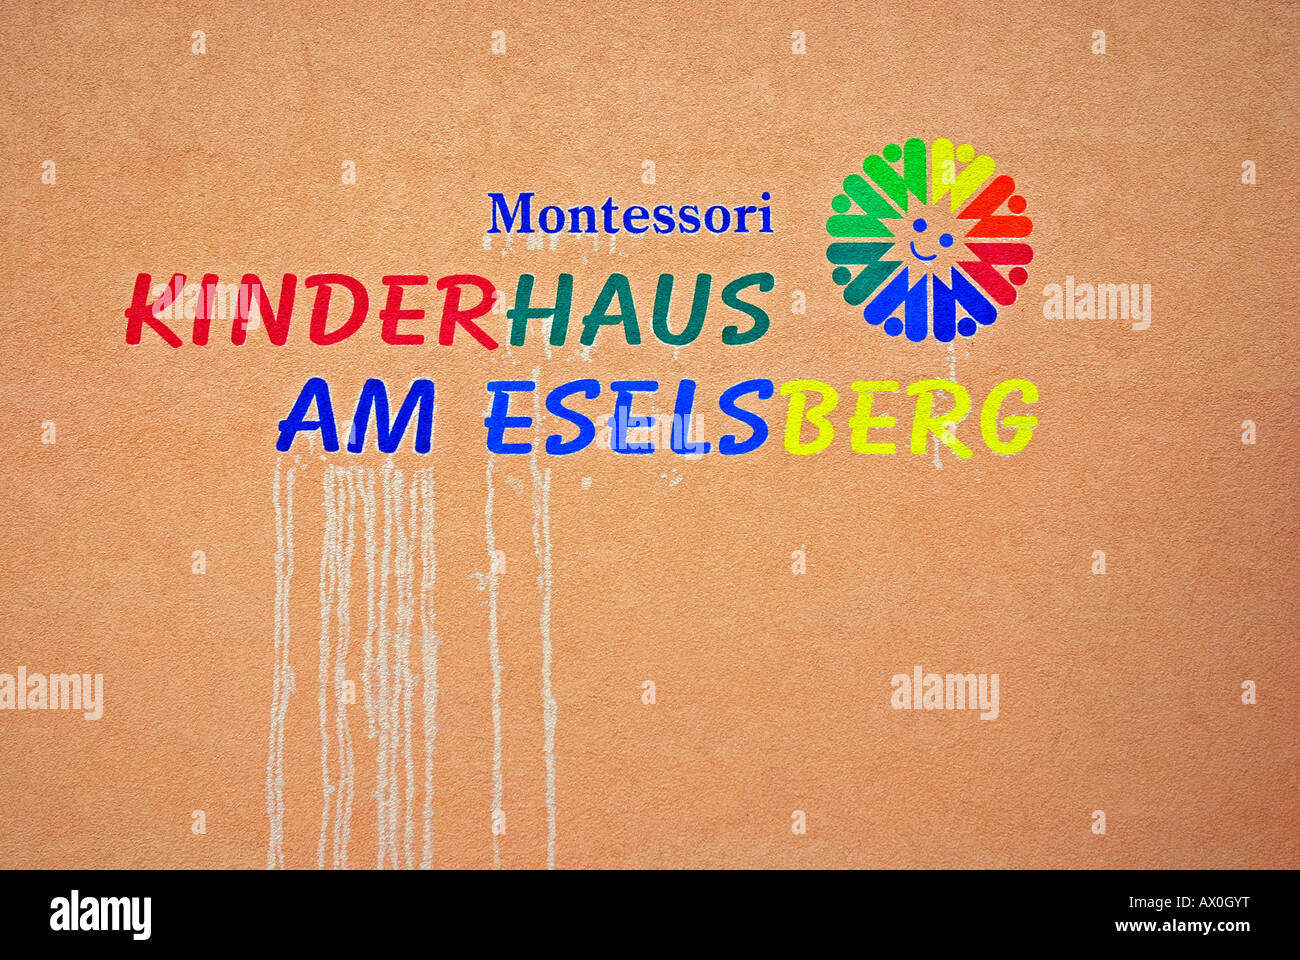 Montessori Children's House, Eselsberg, Ulm, Baden-Wuerttemberg, Germany, Europe Stock Photo